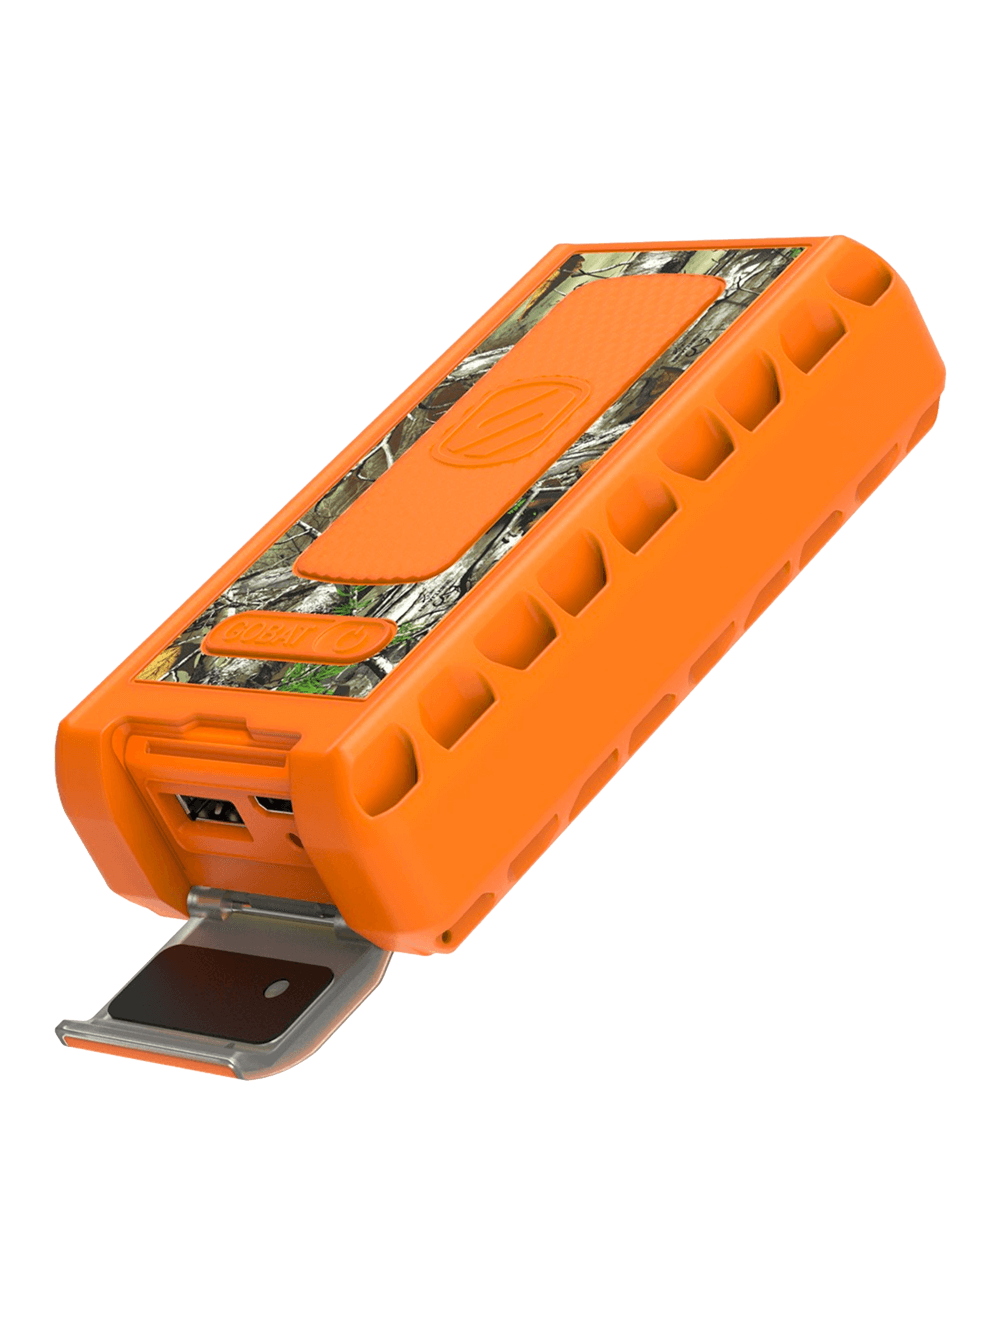 Scosche RPB6RT Rugged Portable Backup Battery 6000MAH 1USB - Realtree Camo